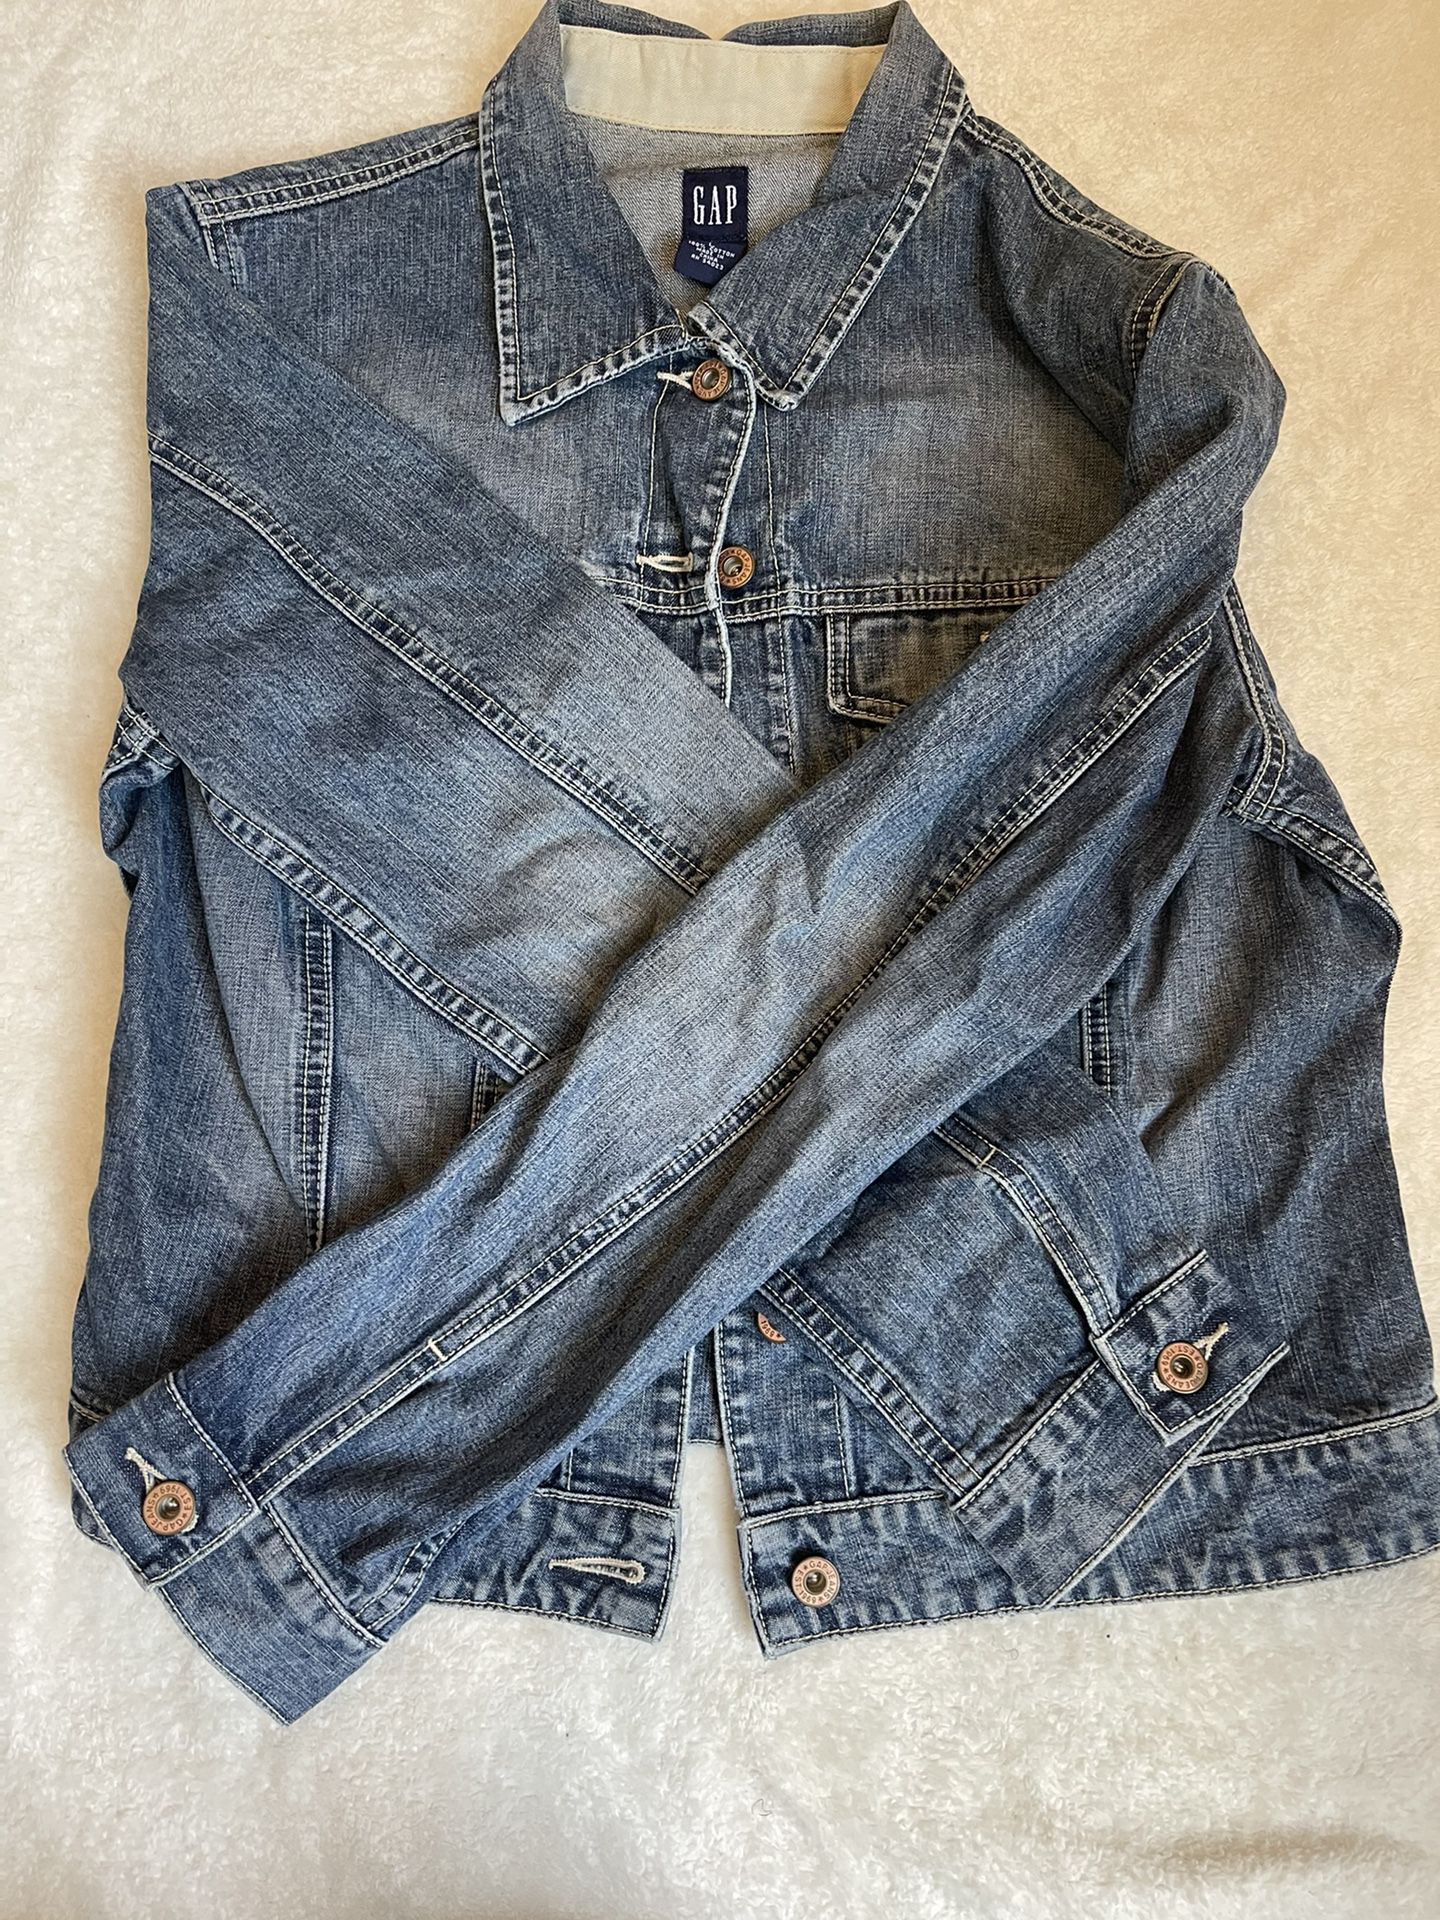 Gap Vintage Jean Jacket, Large